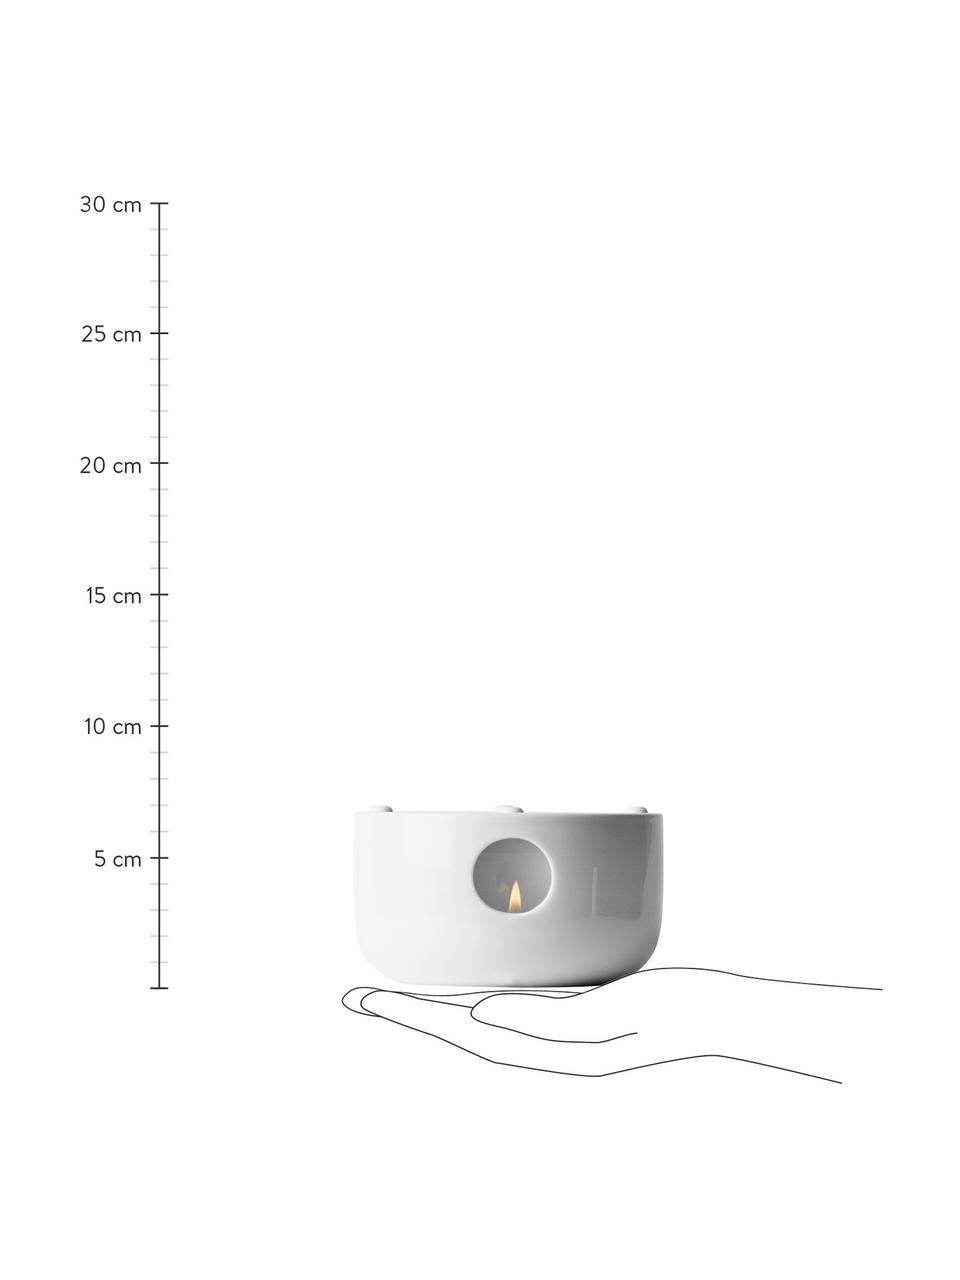 Stövchen Kettle aus Porzellan, Porzellan, Silikon, Transparent,Weiß, Ø 14 x H 7 cm